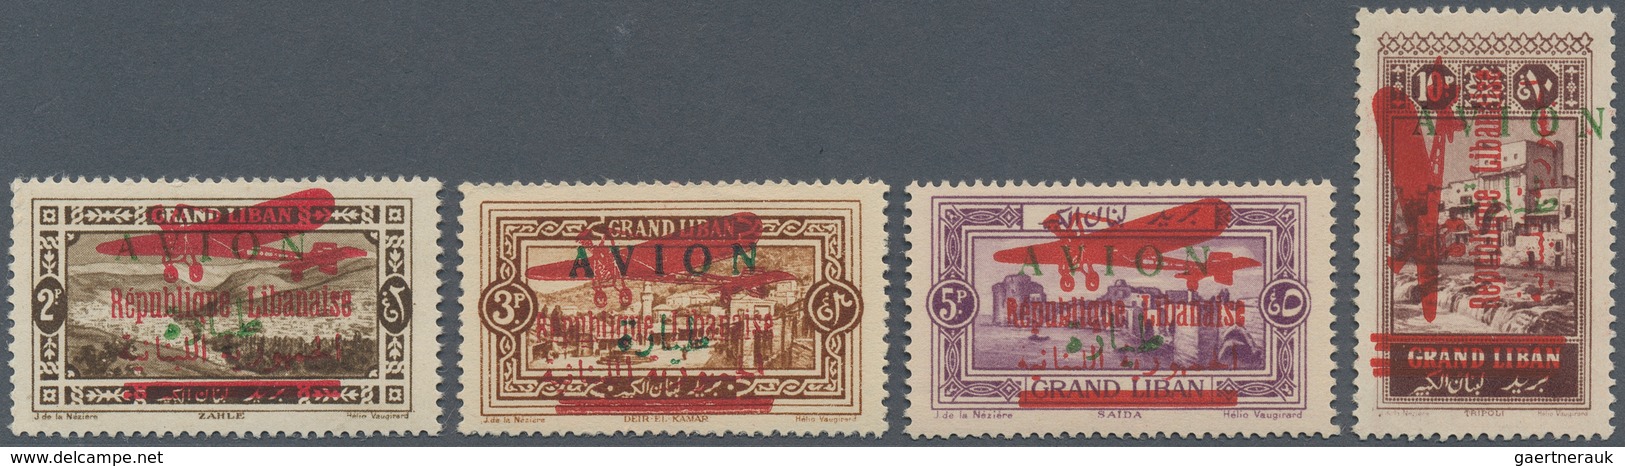 Libanon: 1928, Airmails, Red "Republique Libanaise/Plane" Surcharge On Green "AVION" Overprints, Com - Lebanon